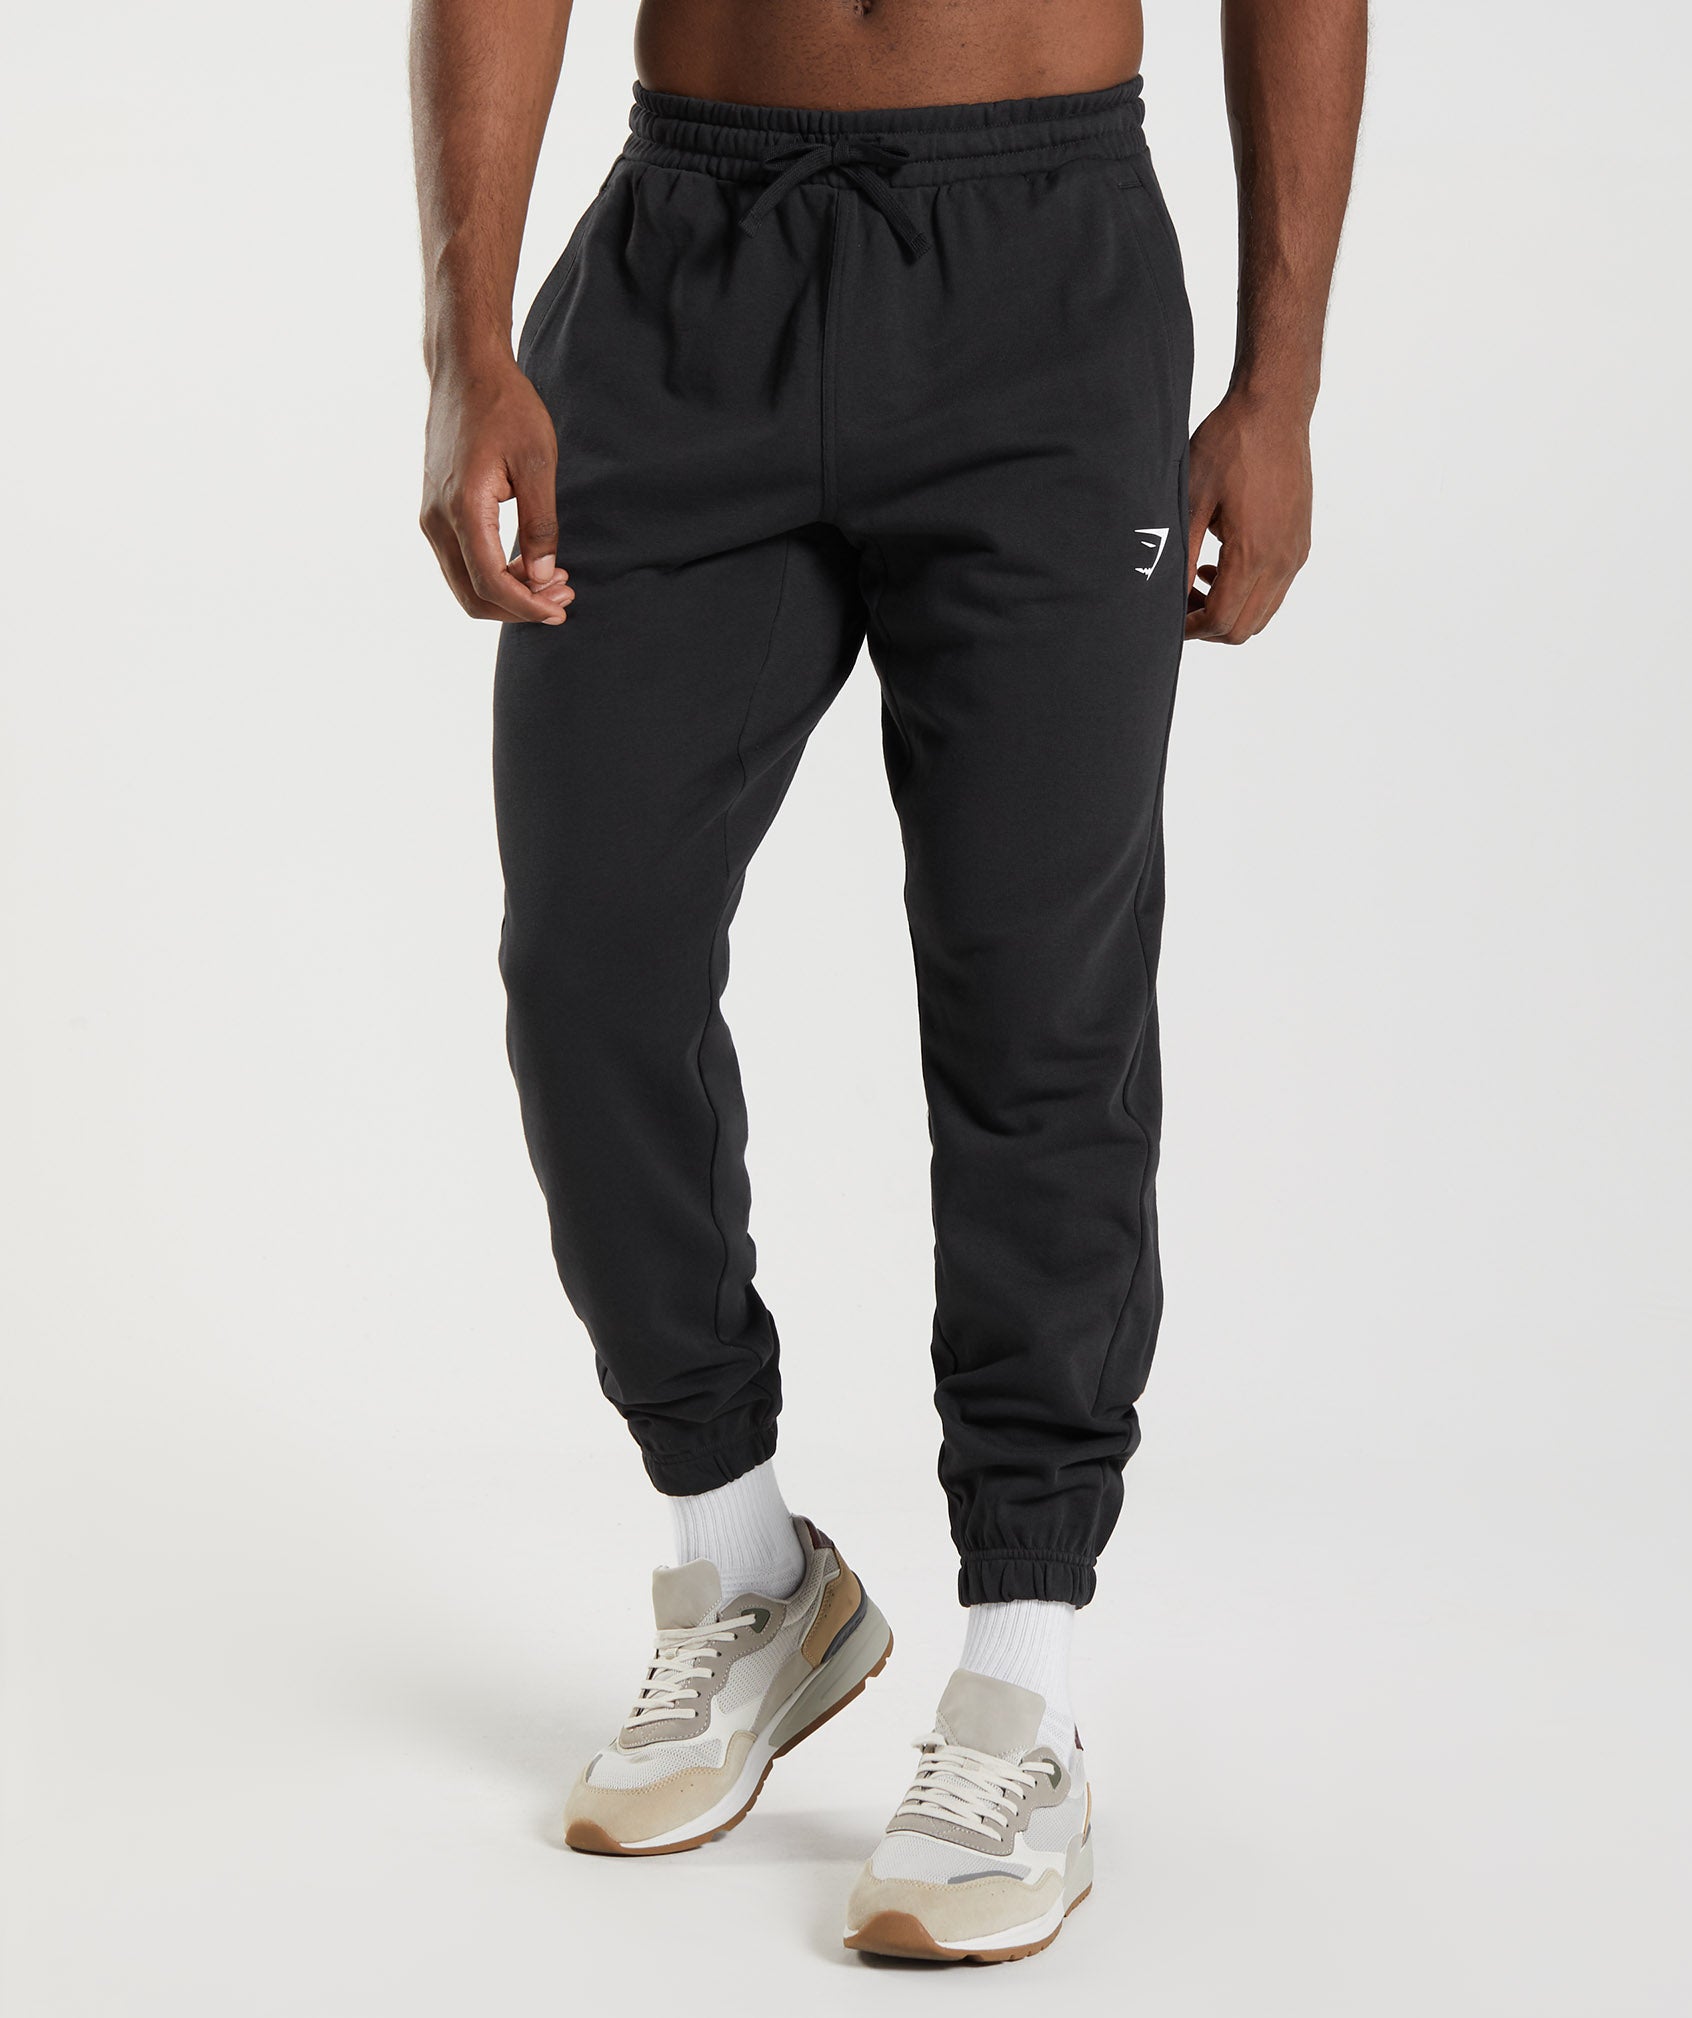 Gymshark, Pants, Gymshark Black Crest Joggers Mens Large Slim Fit Brushed  Fabric Loungewear Pants